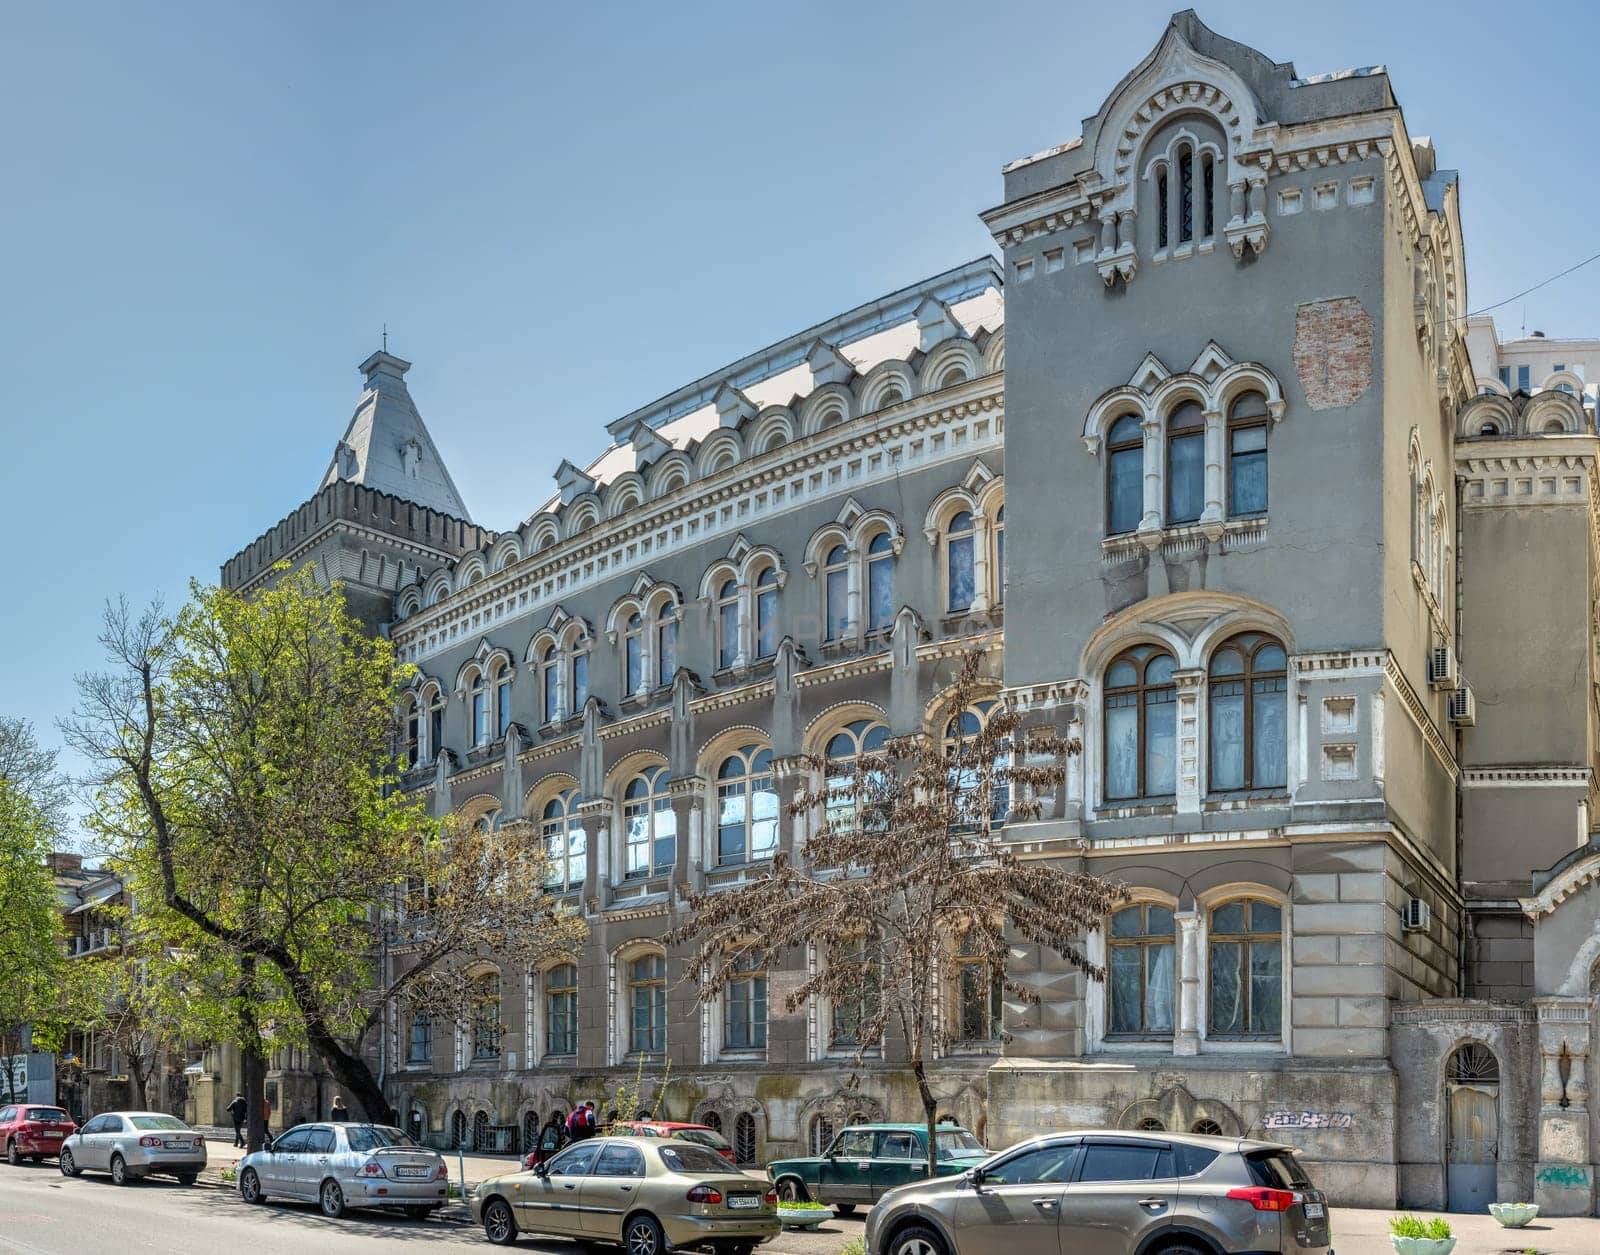 Historical building on the Marazlievskaya street in Odessa, Ukraine by Multipedia